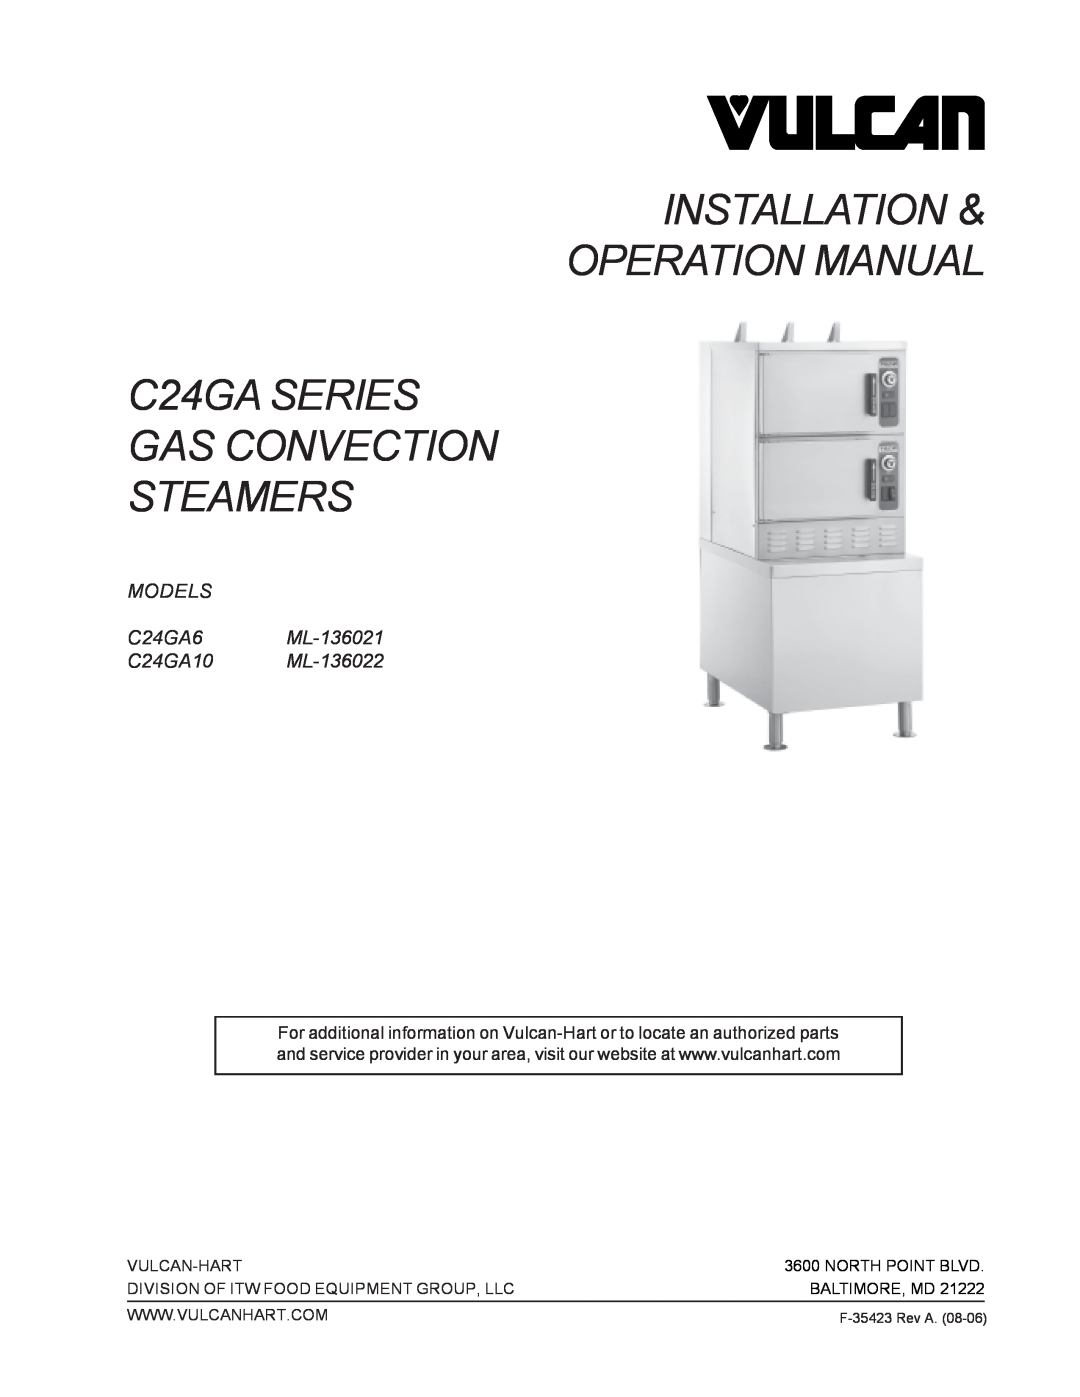 Vulcan-Hart operation manual Gas Convection Steamers, MODELS C24GA6 ML-136021 C24GA10 ML-136022, Vulcan-Hart 